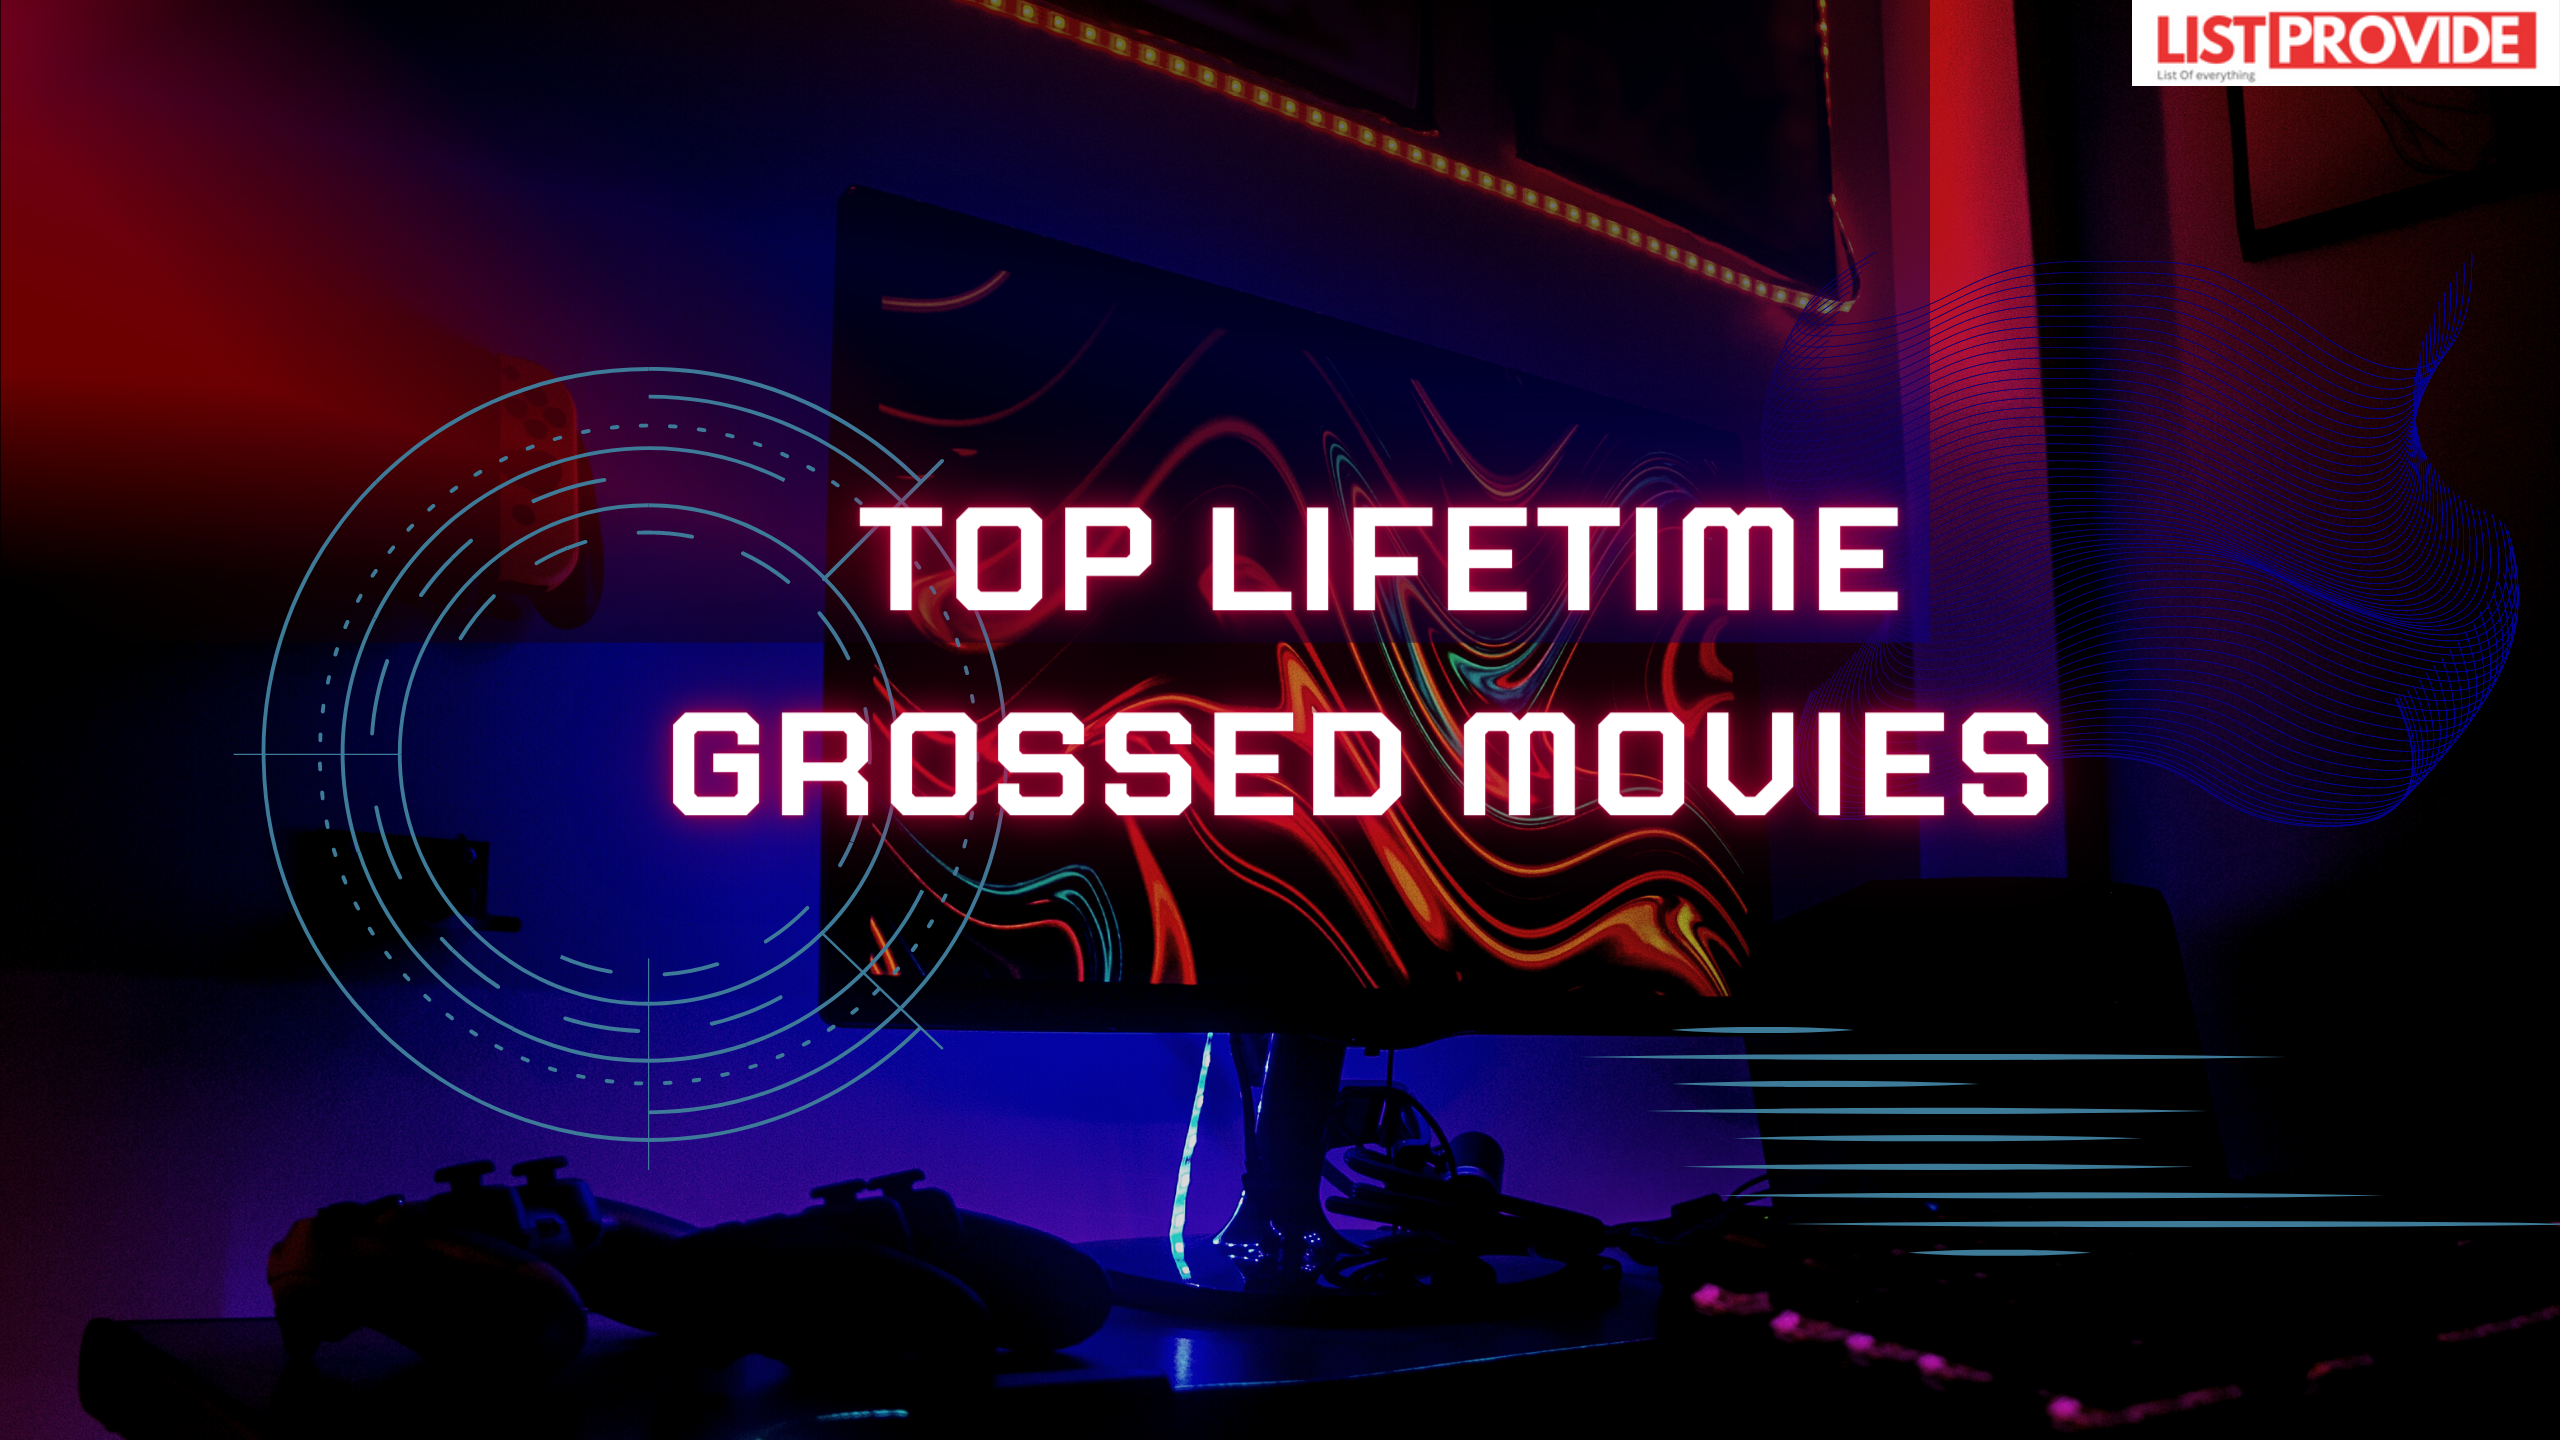 10 Top lifetime grossed movies !!